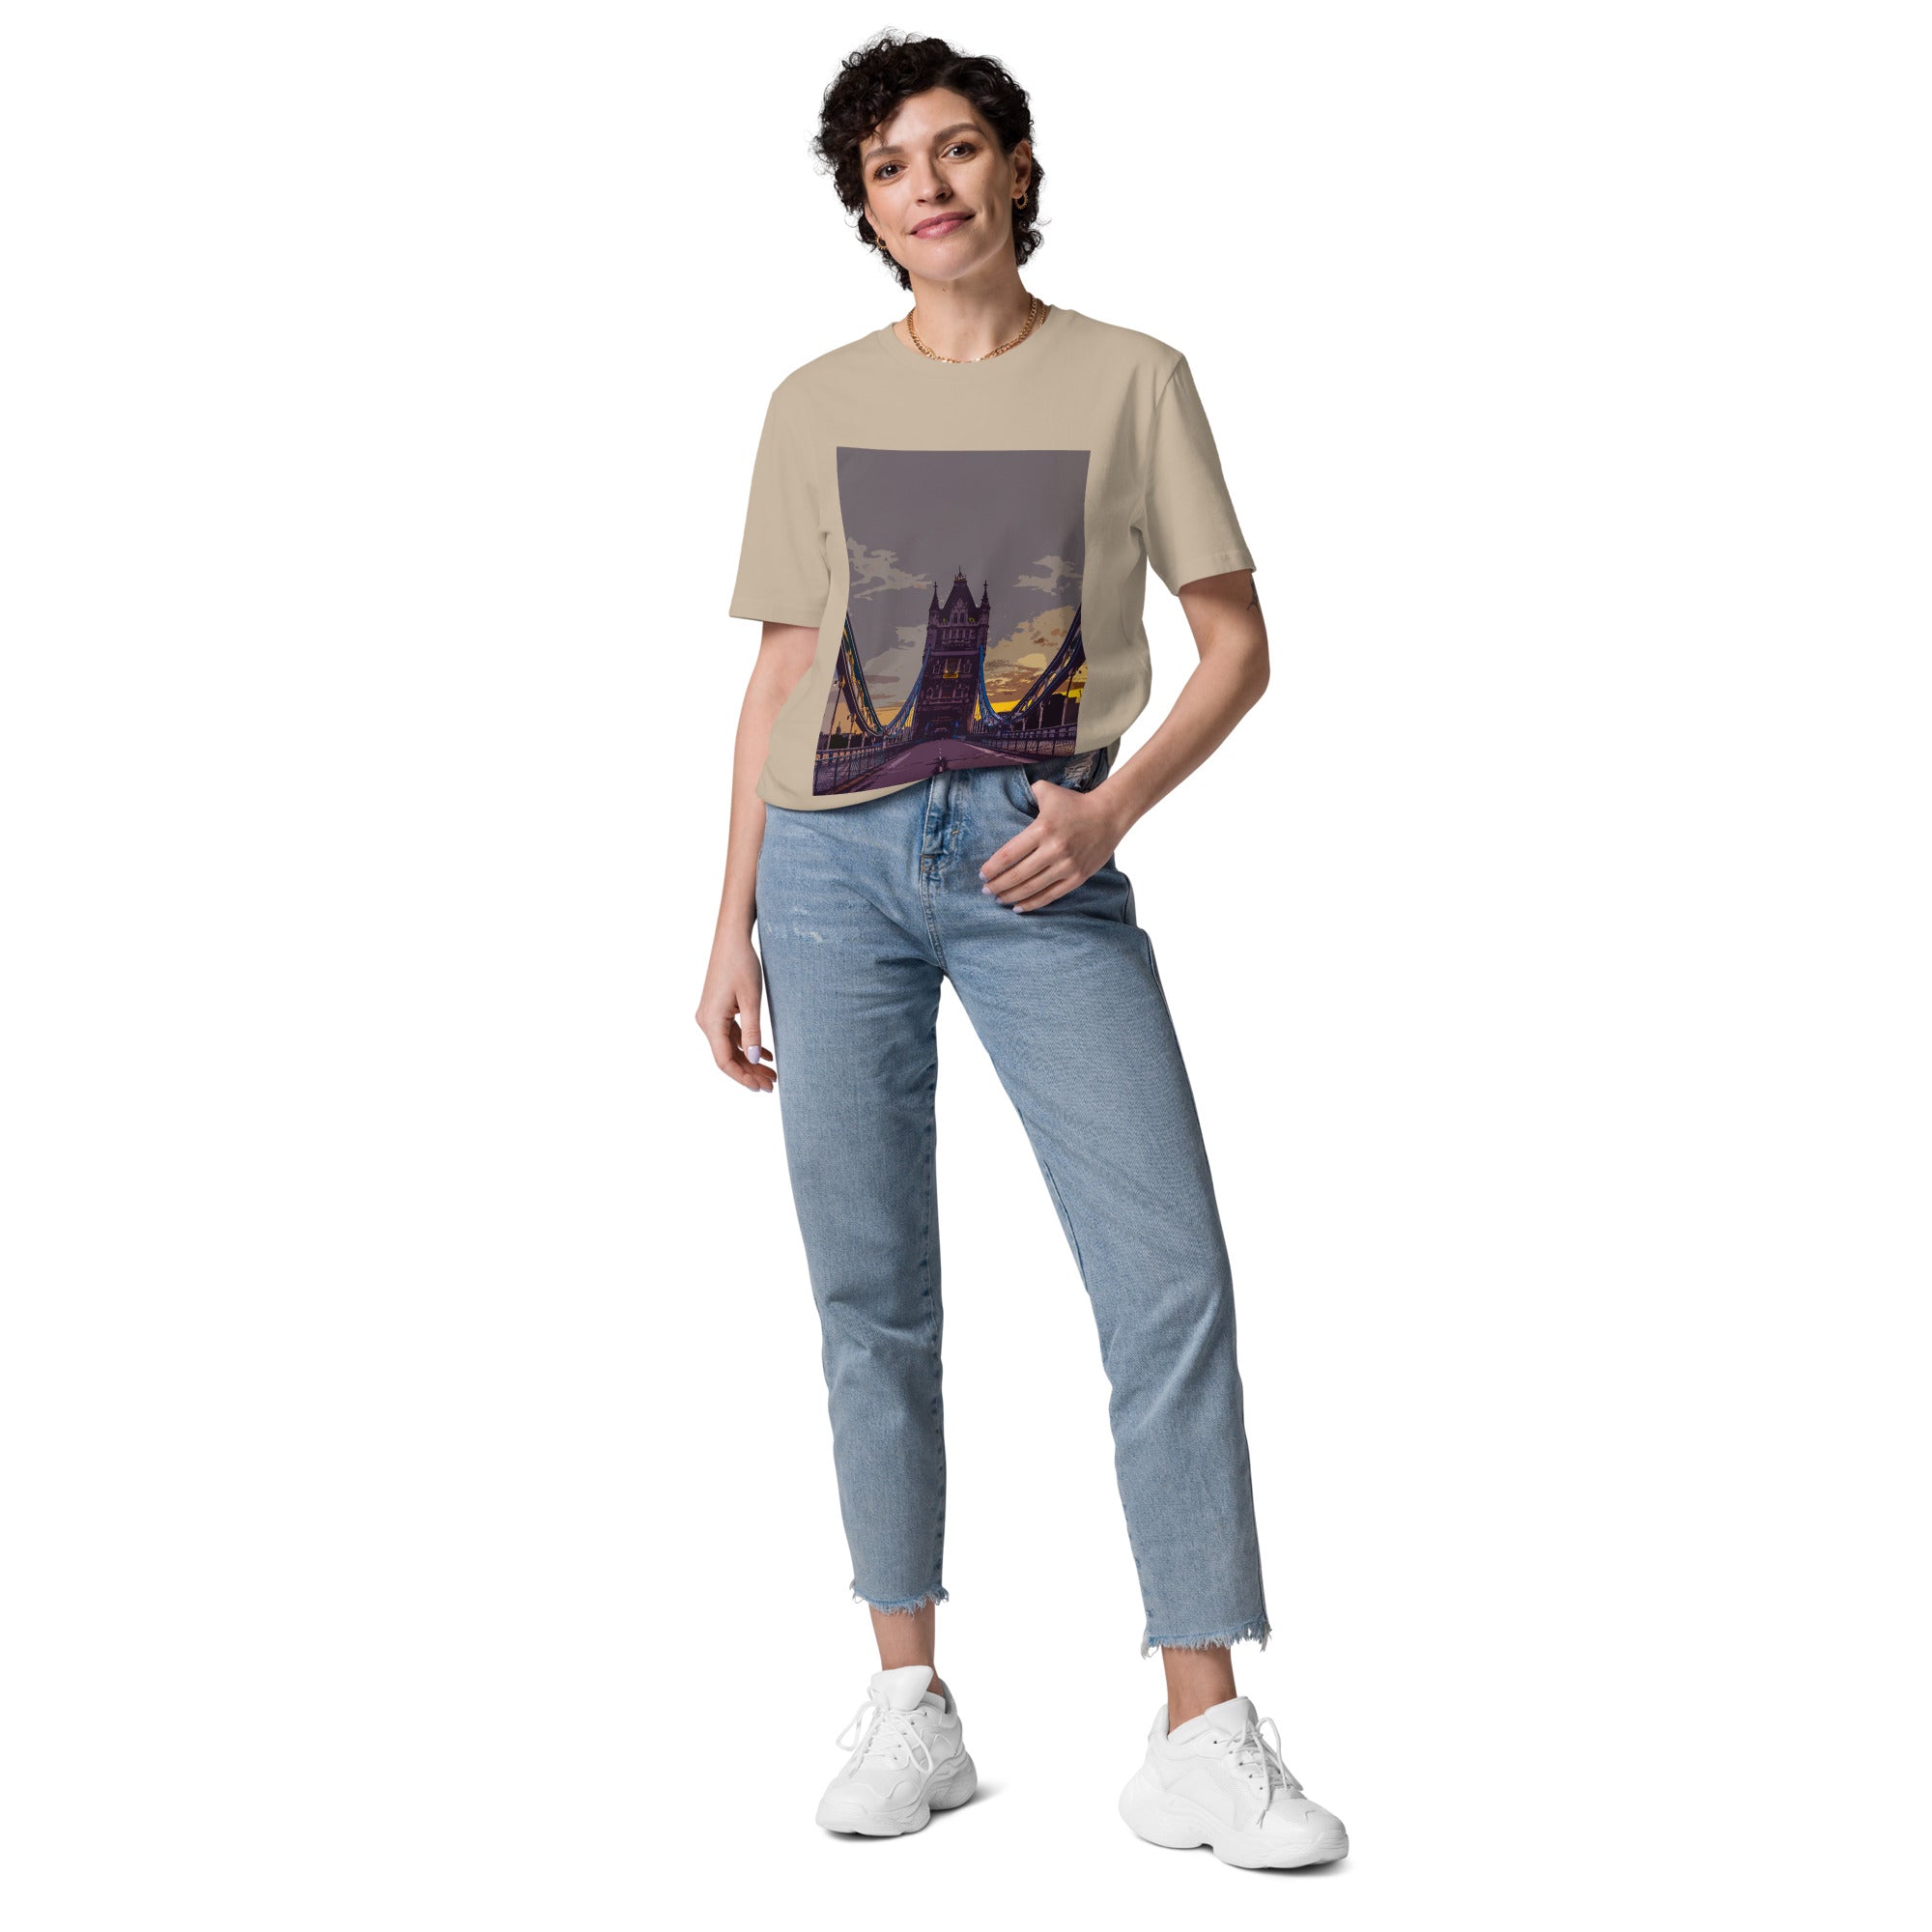 Tower Bridge at Dawn - Organic Cotton T-Shirt